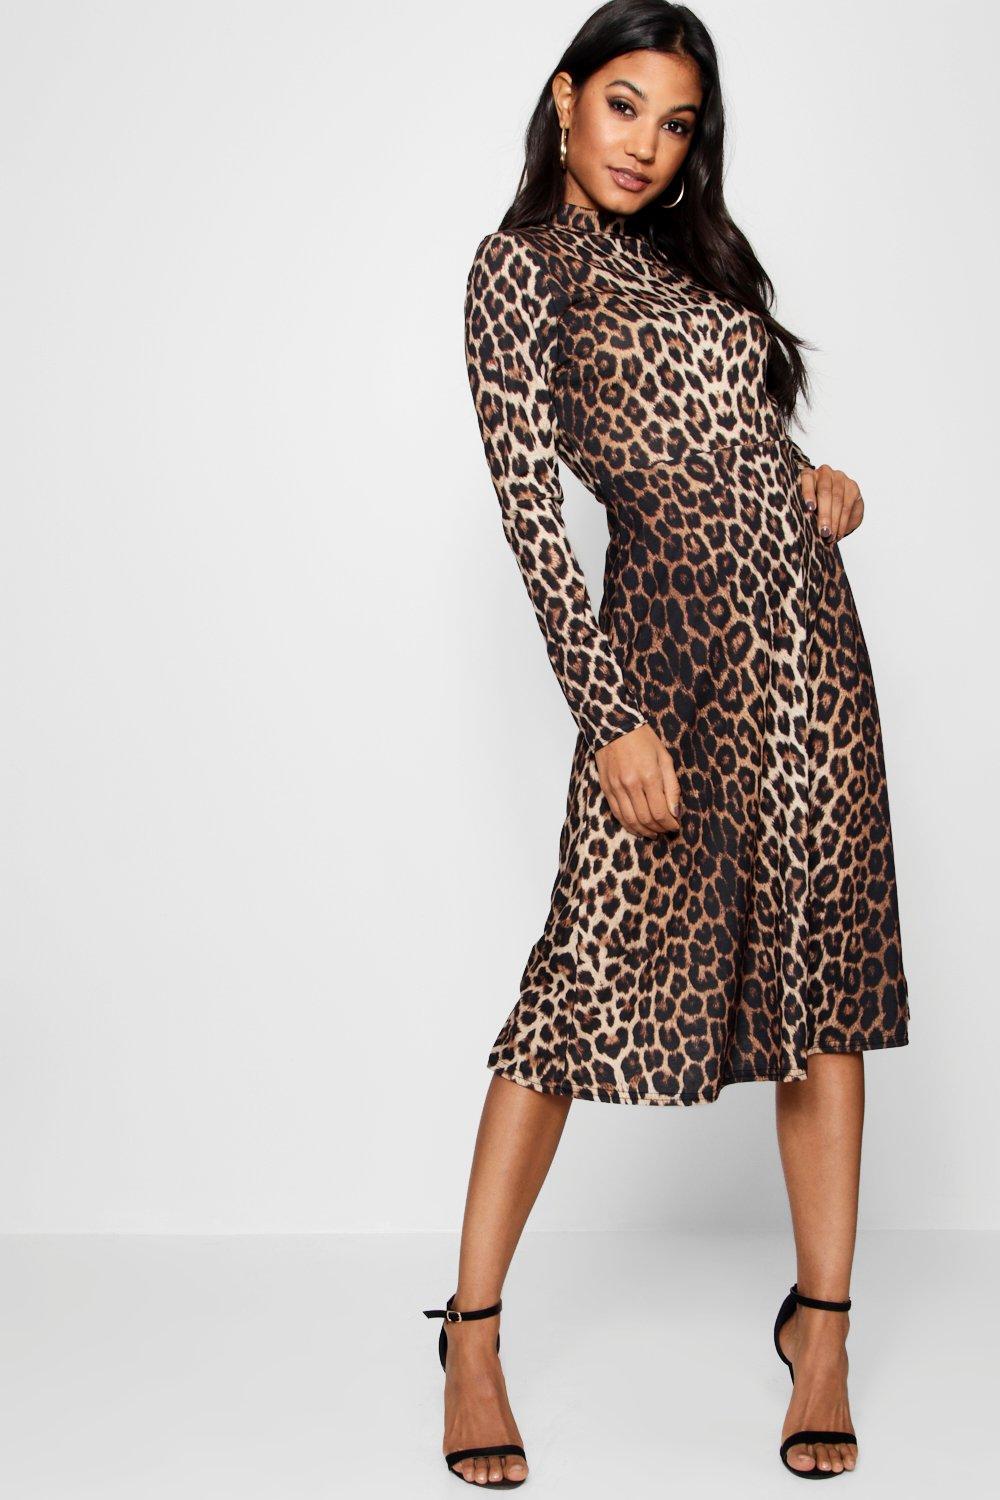 boohoo dress leopard